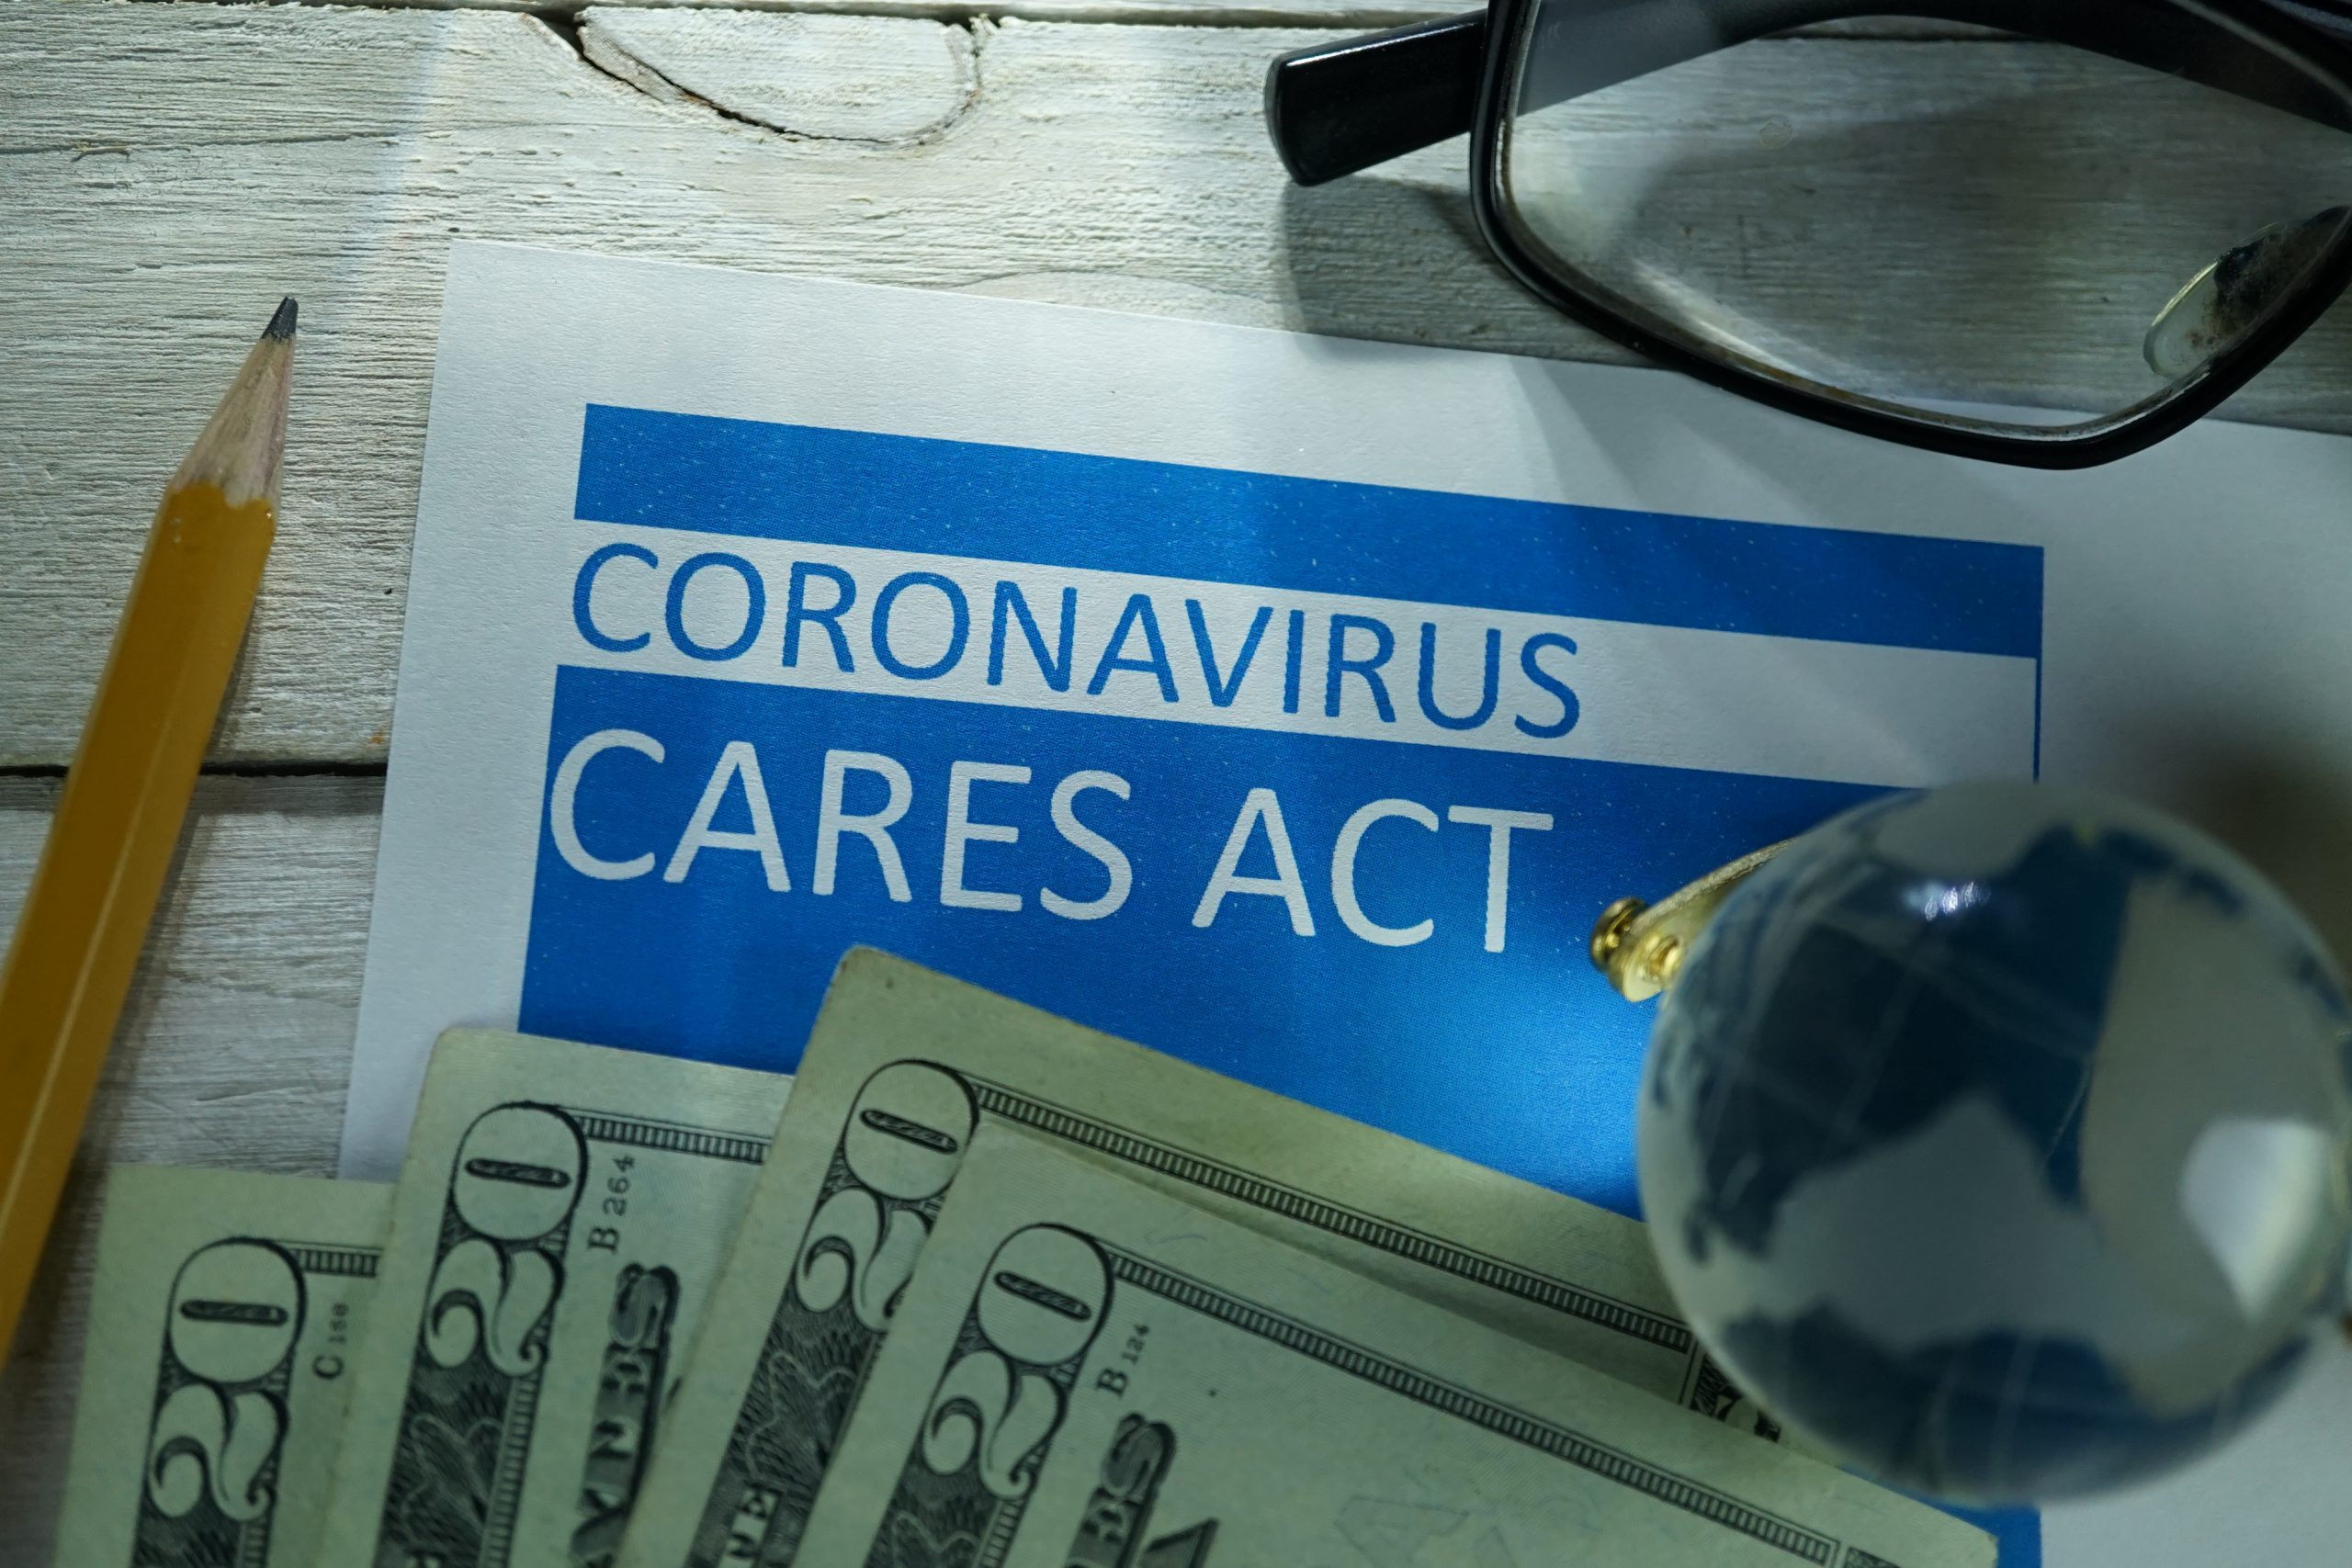 Coronavirus CARES Act paper with money